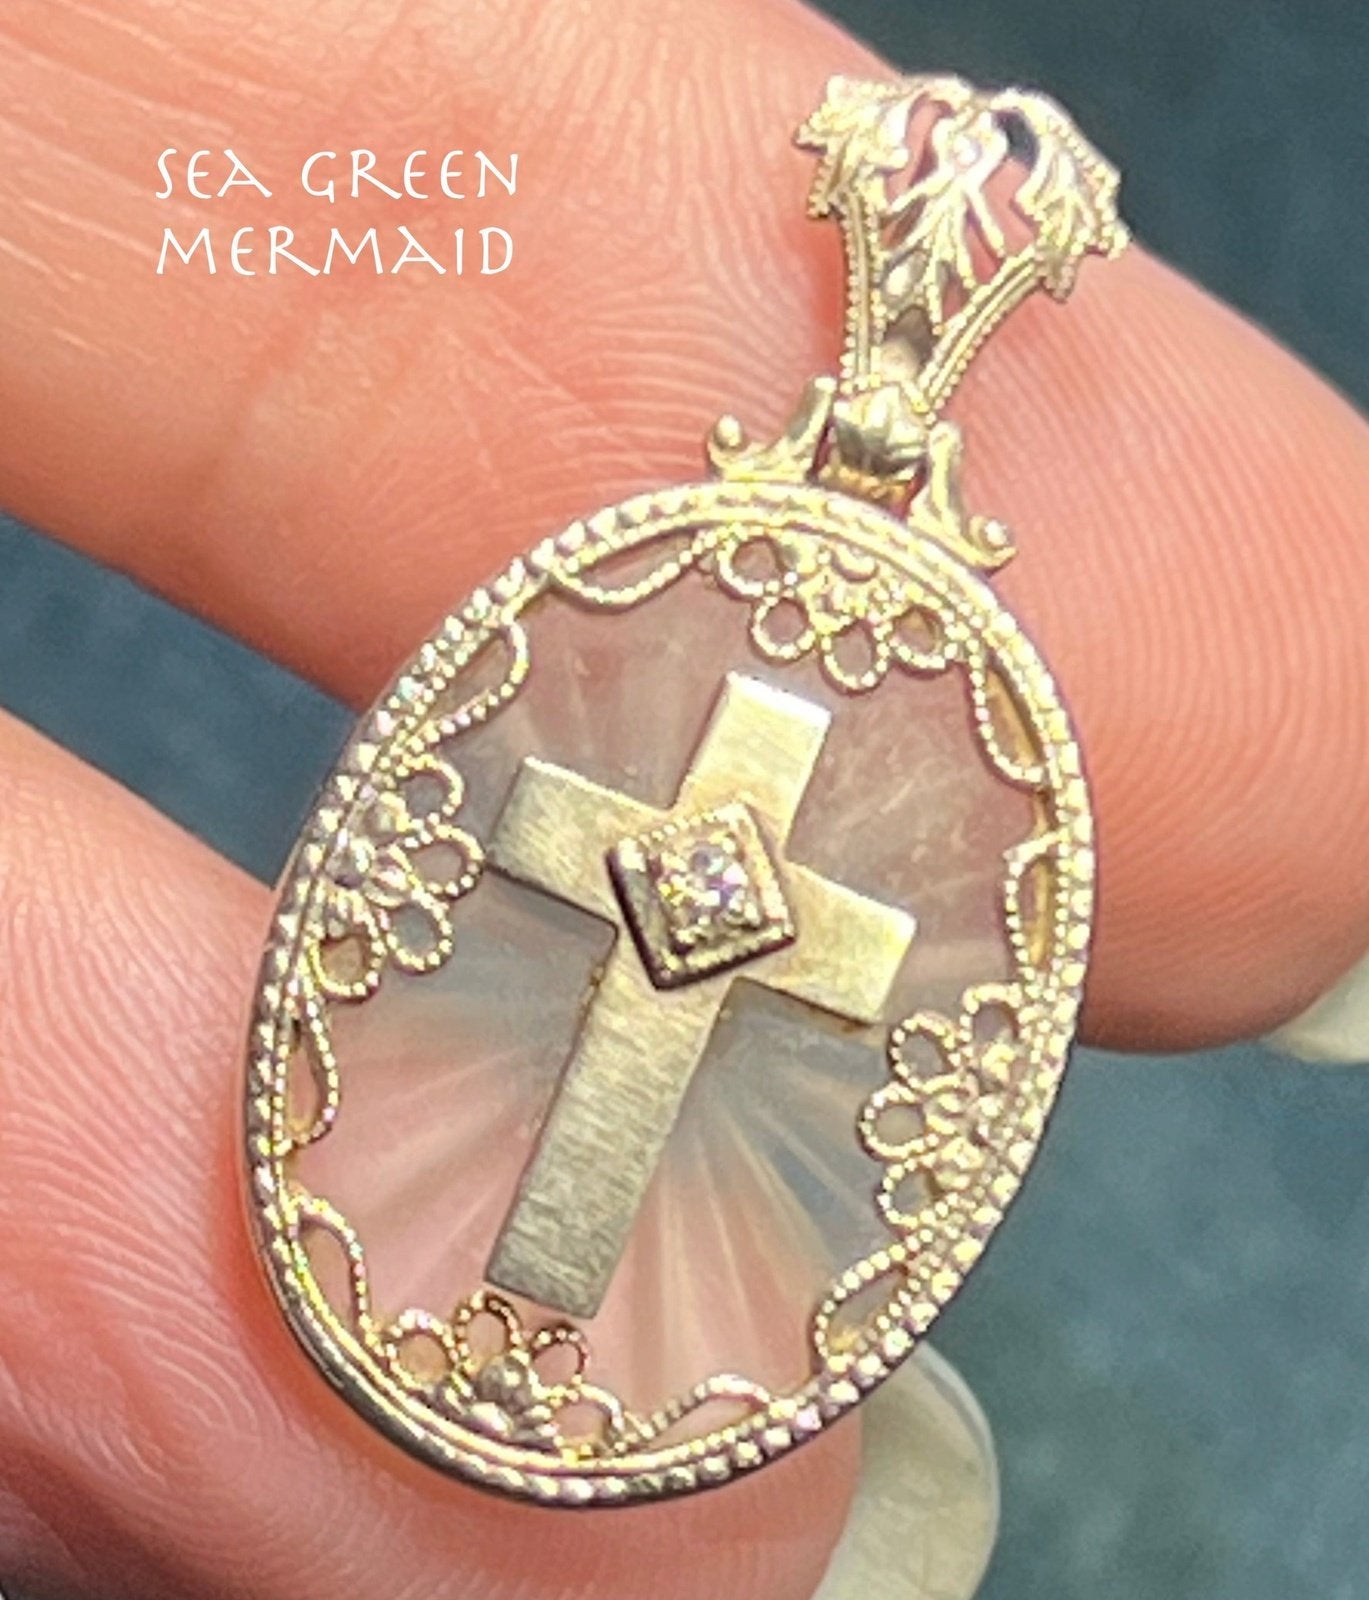 Gold Filigree Cross Necklace